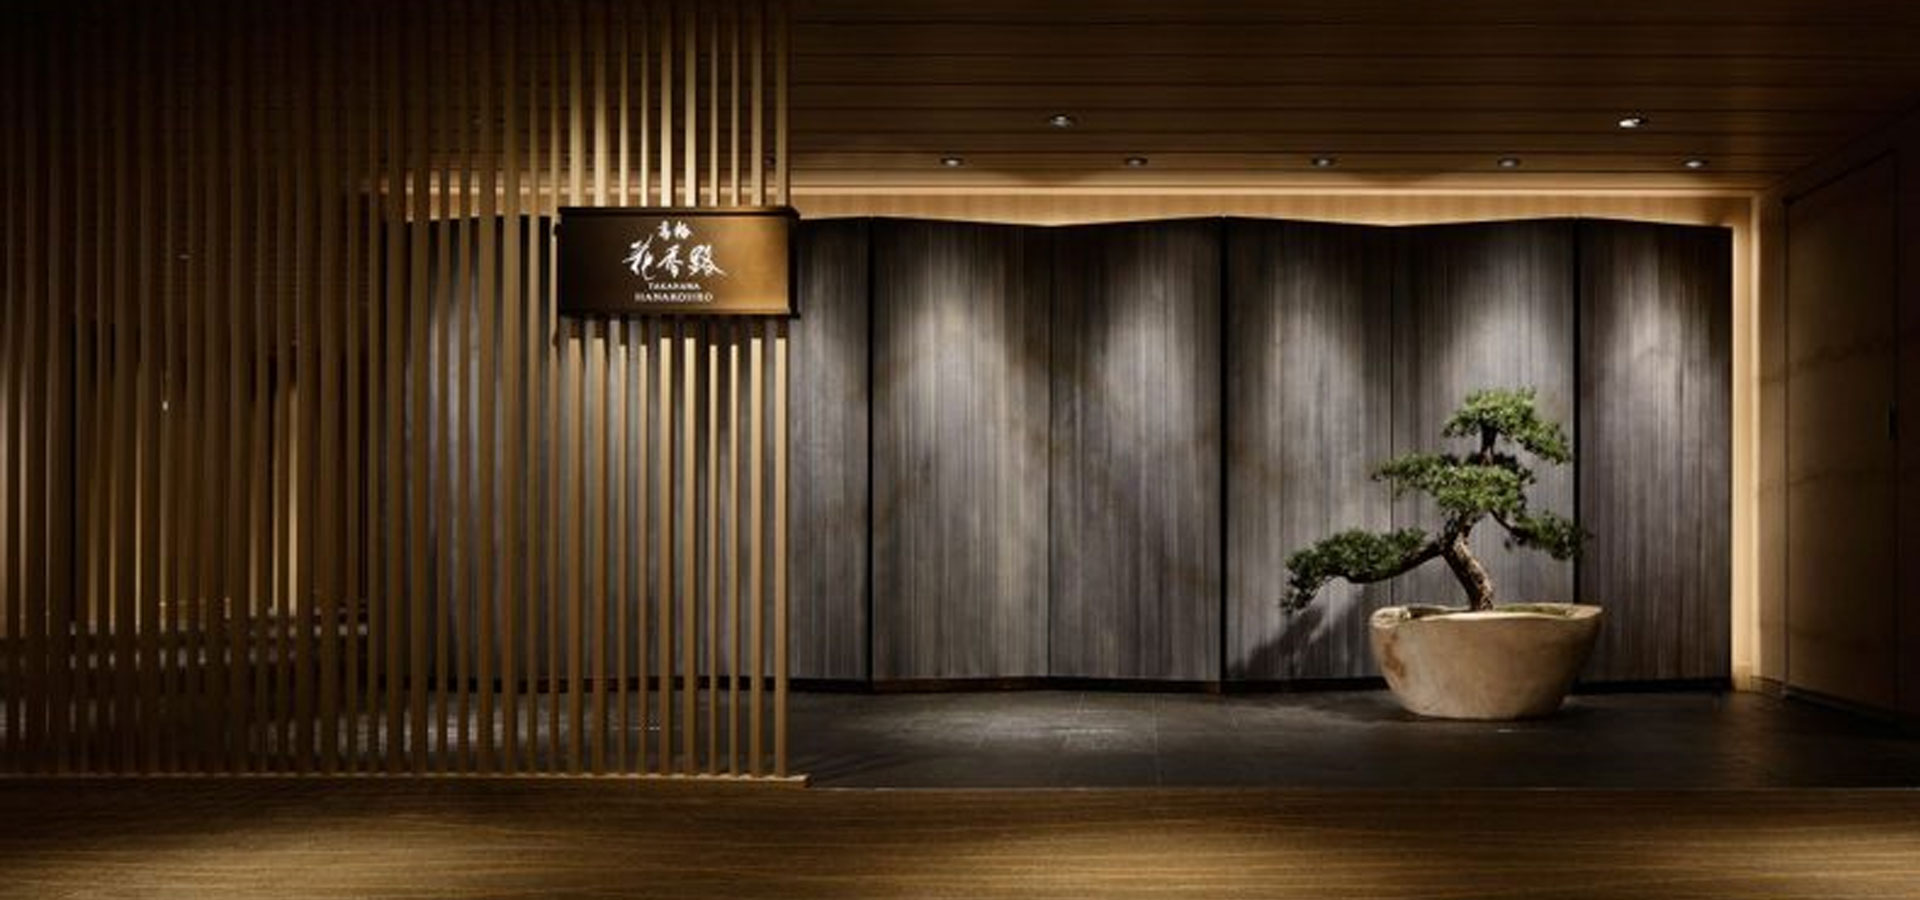 Takanawa Hanakohro – “Ryokan” has been created with a total of 16 rooms